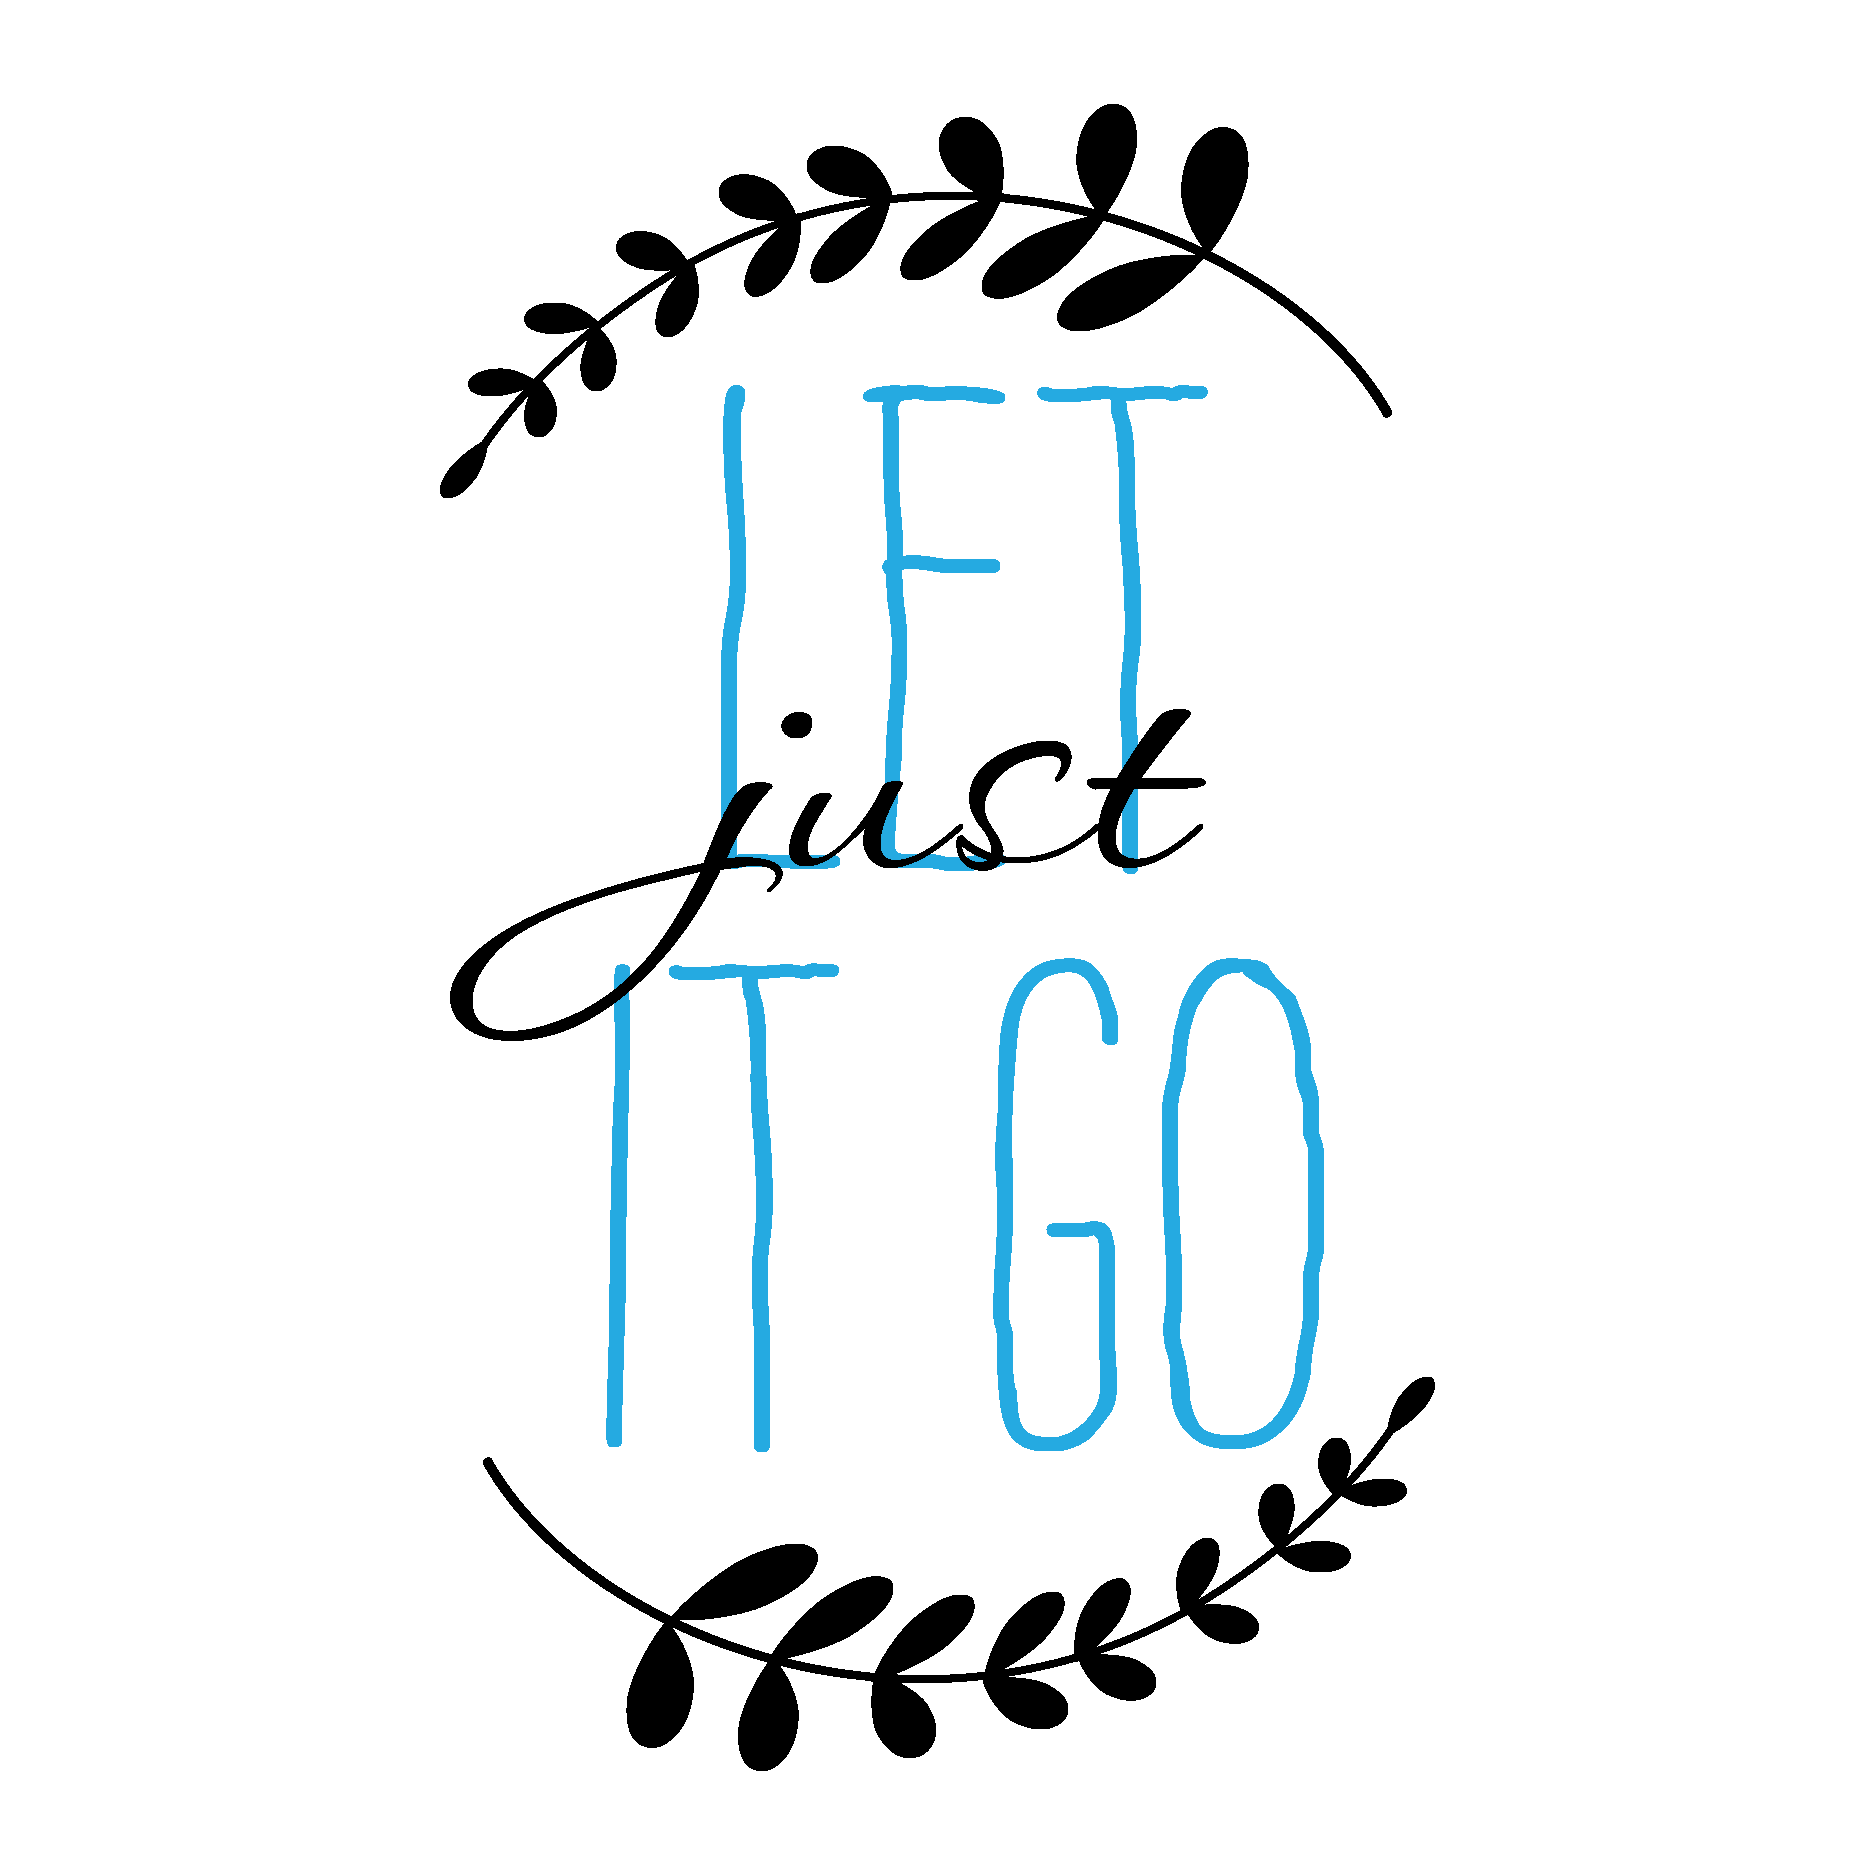 let it go quotes